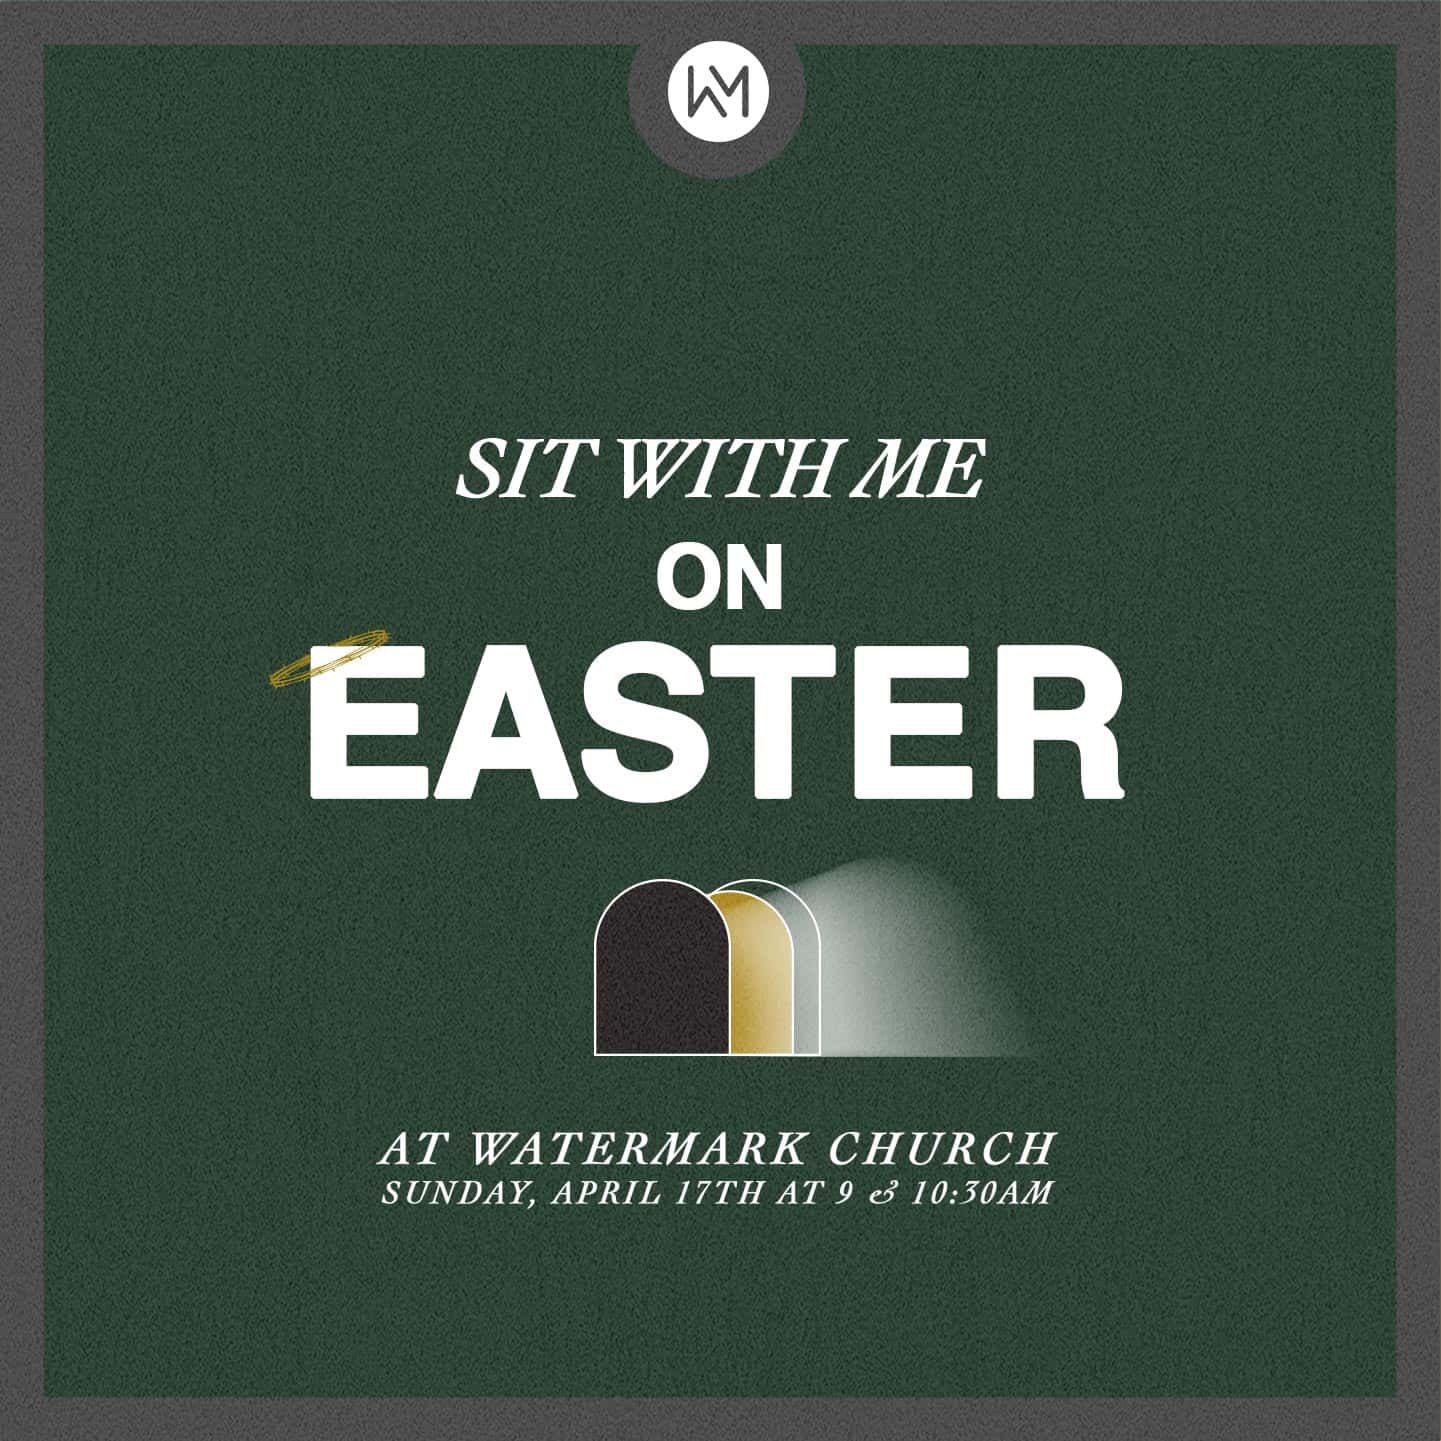 Easter invite 4